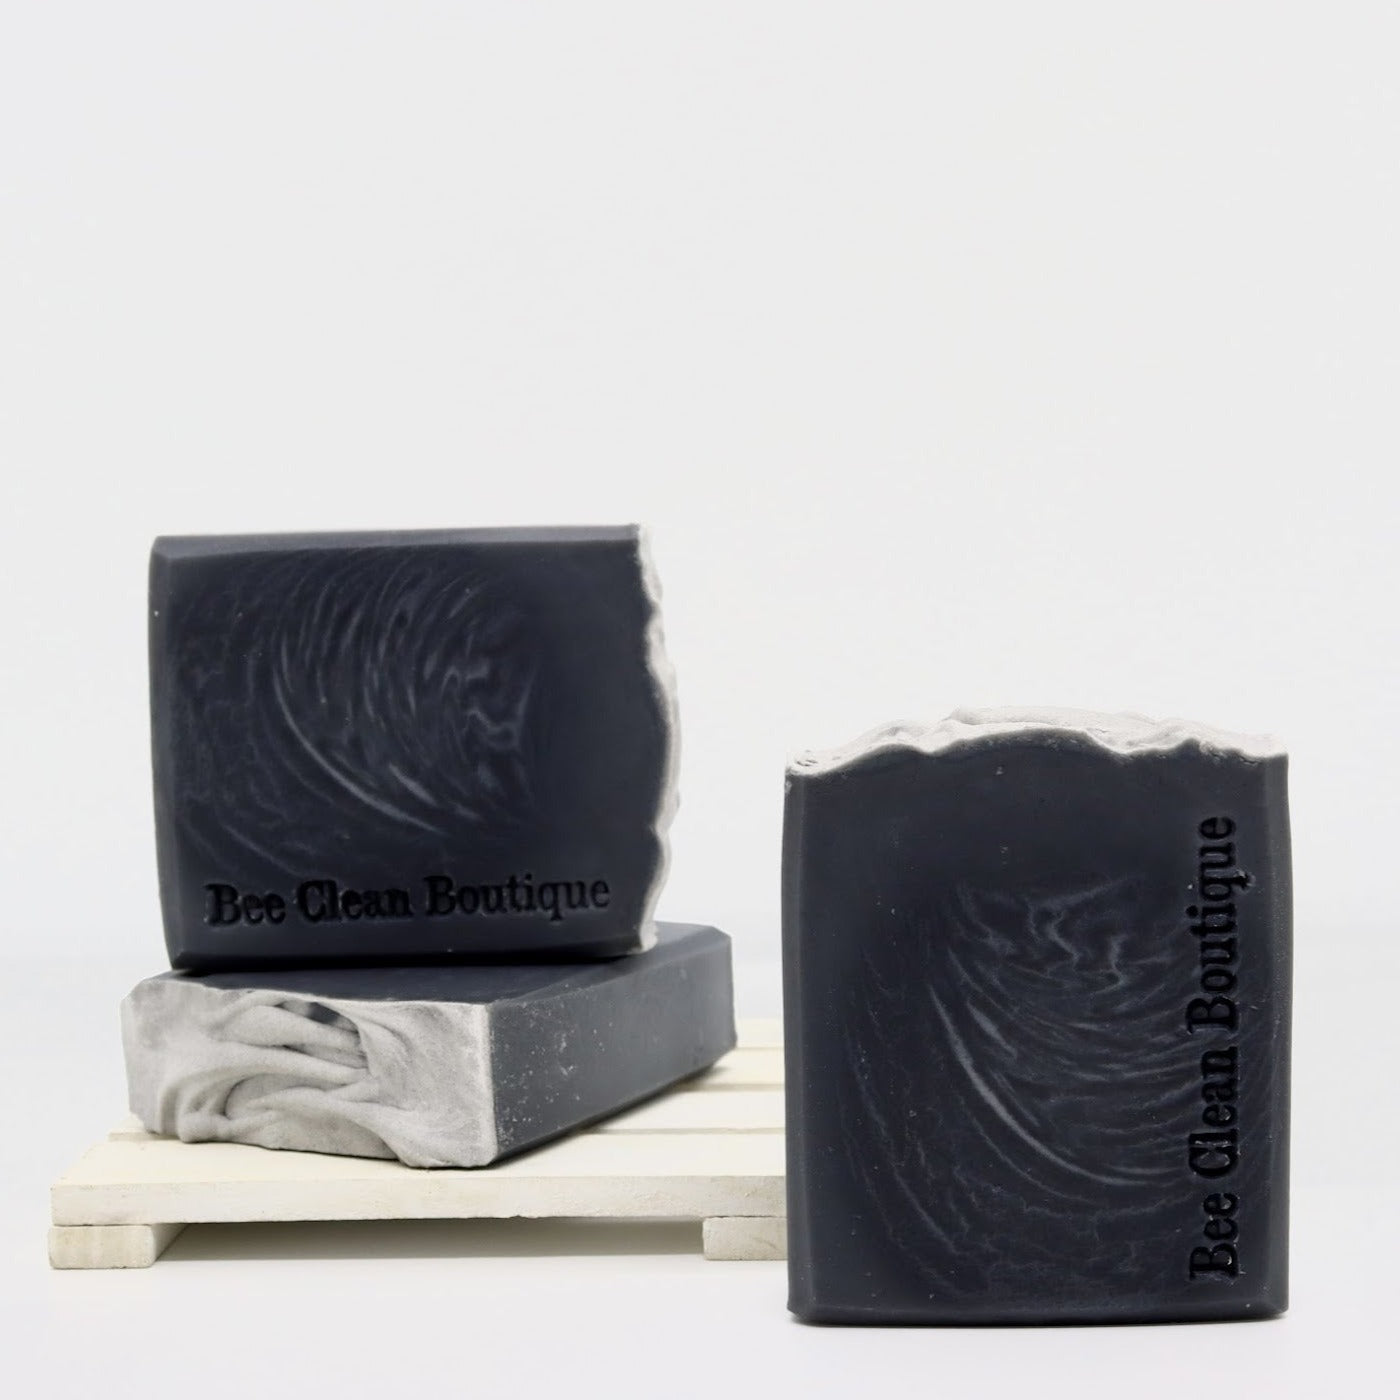 3 bars of black vetiver oak moss artisan soap displayed on white surface